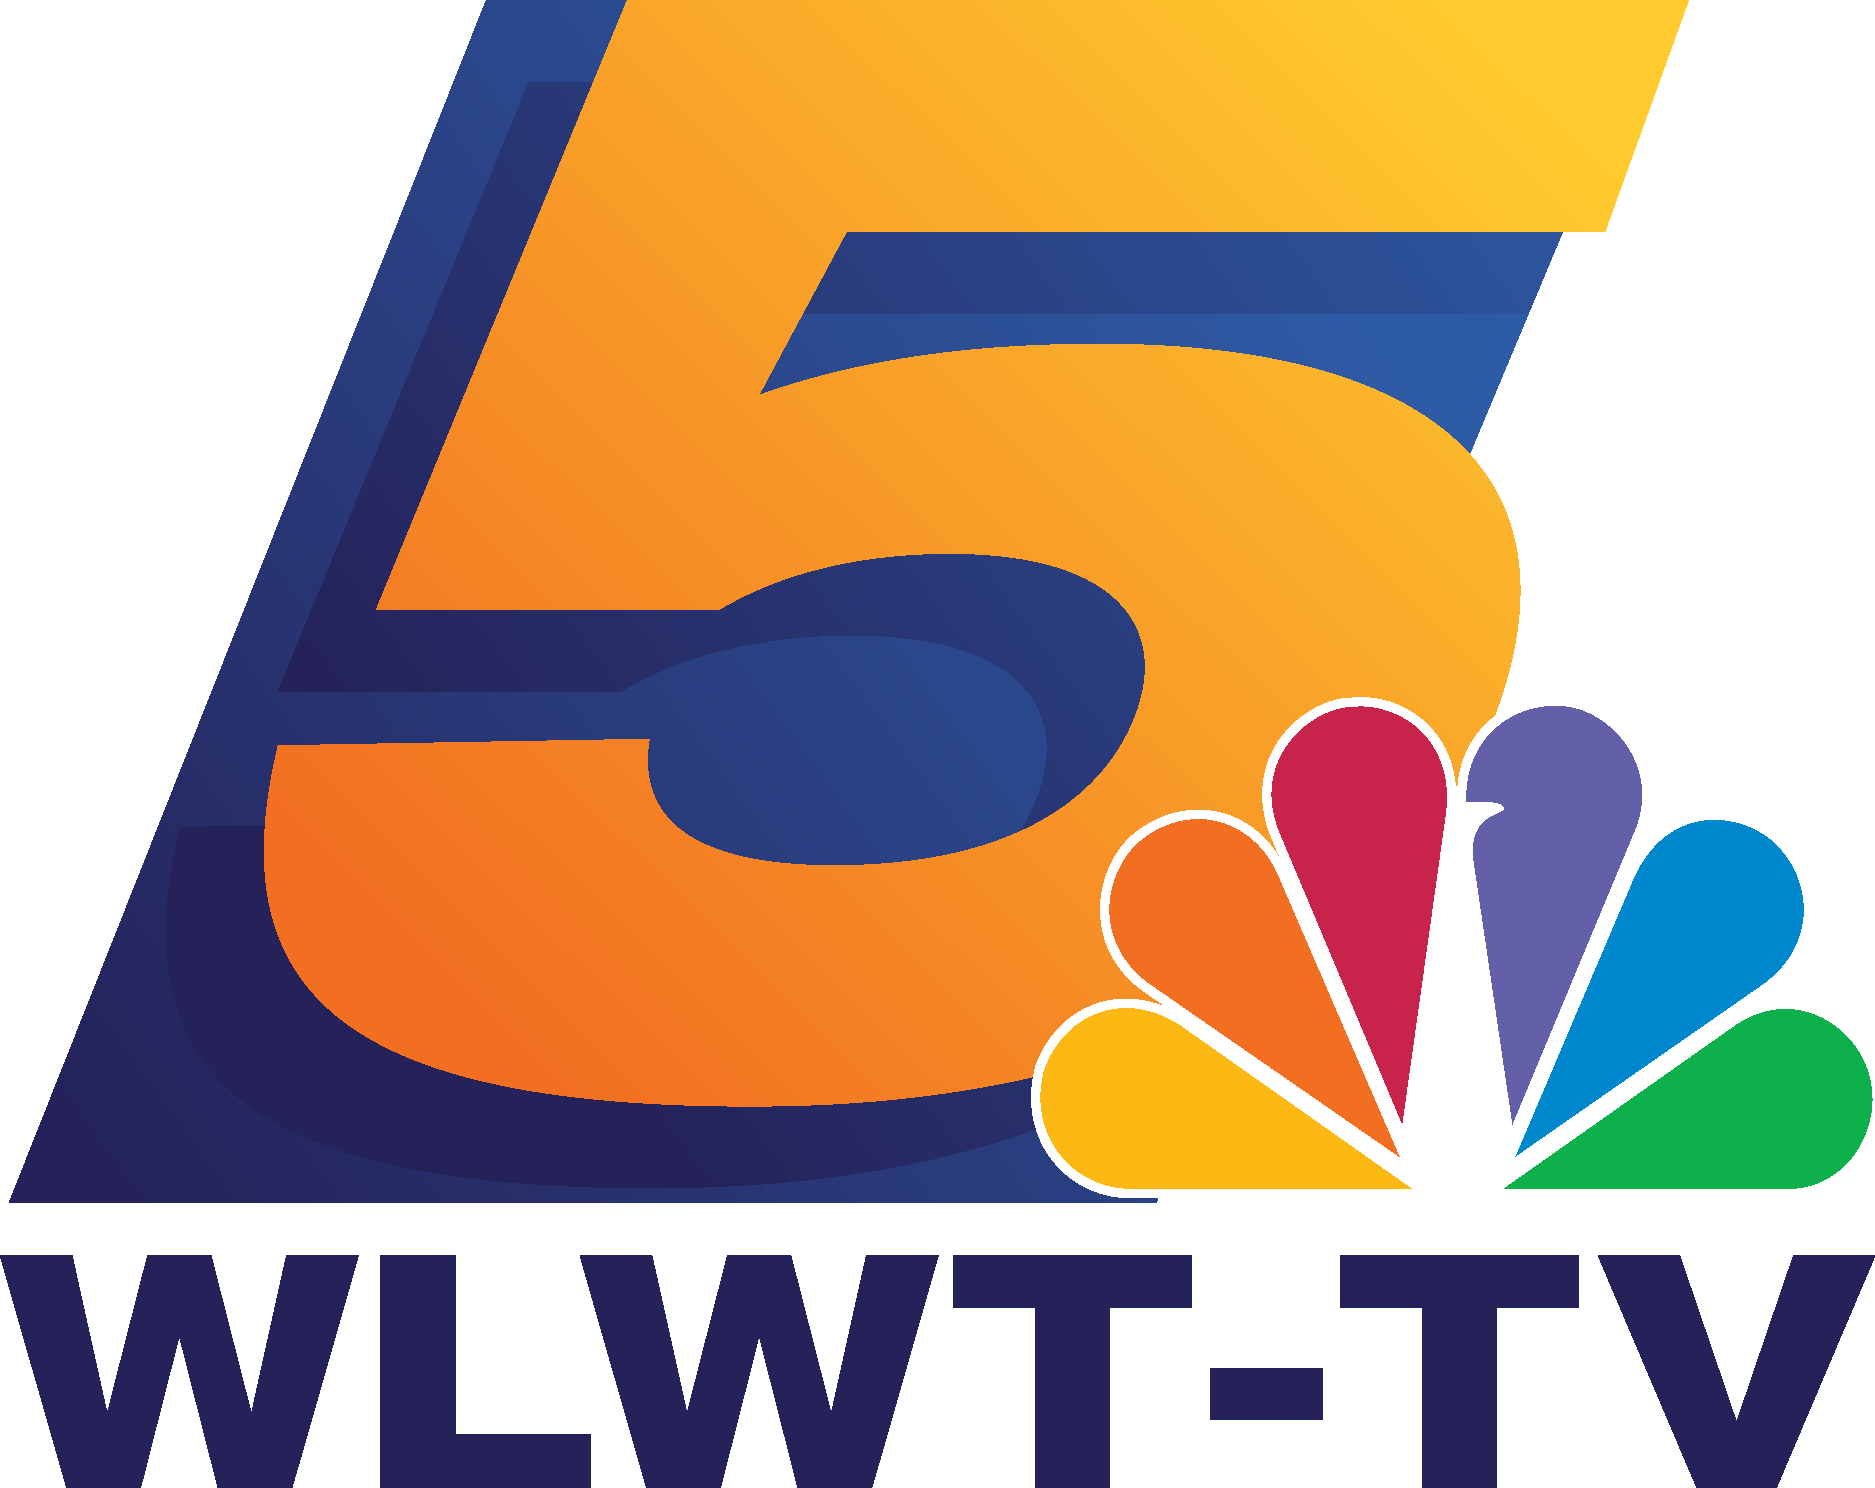 WLWT Channel 5 NBC Cincinnati Logo Vector